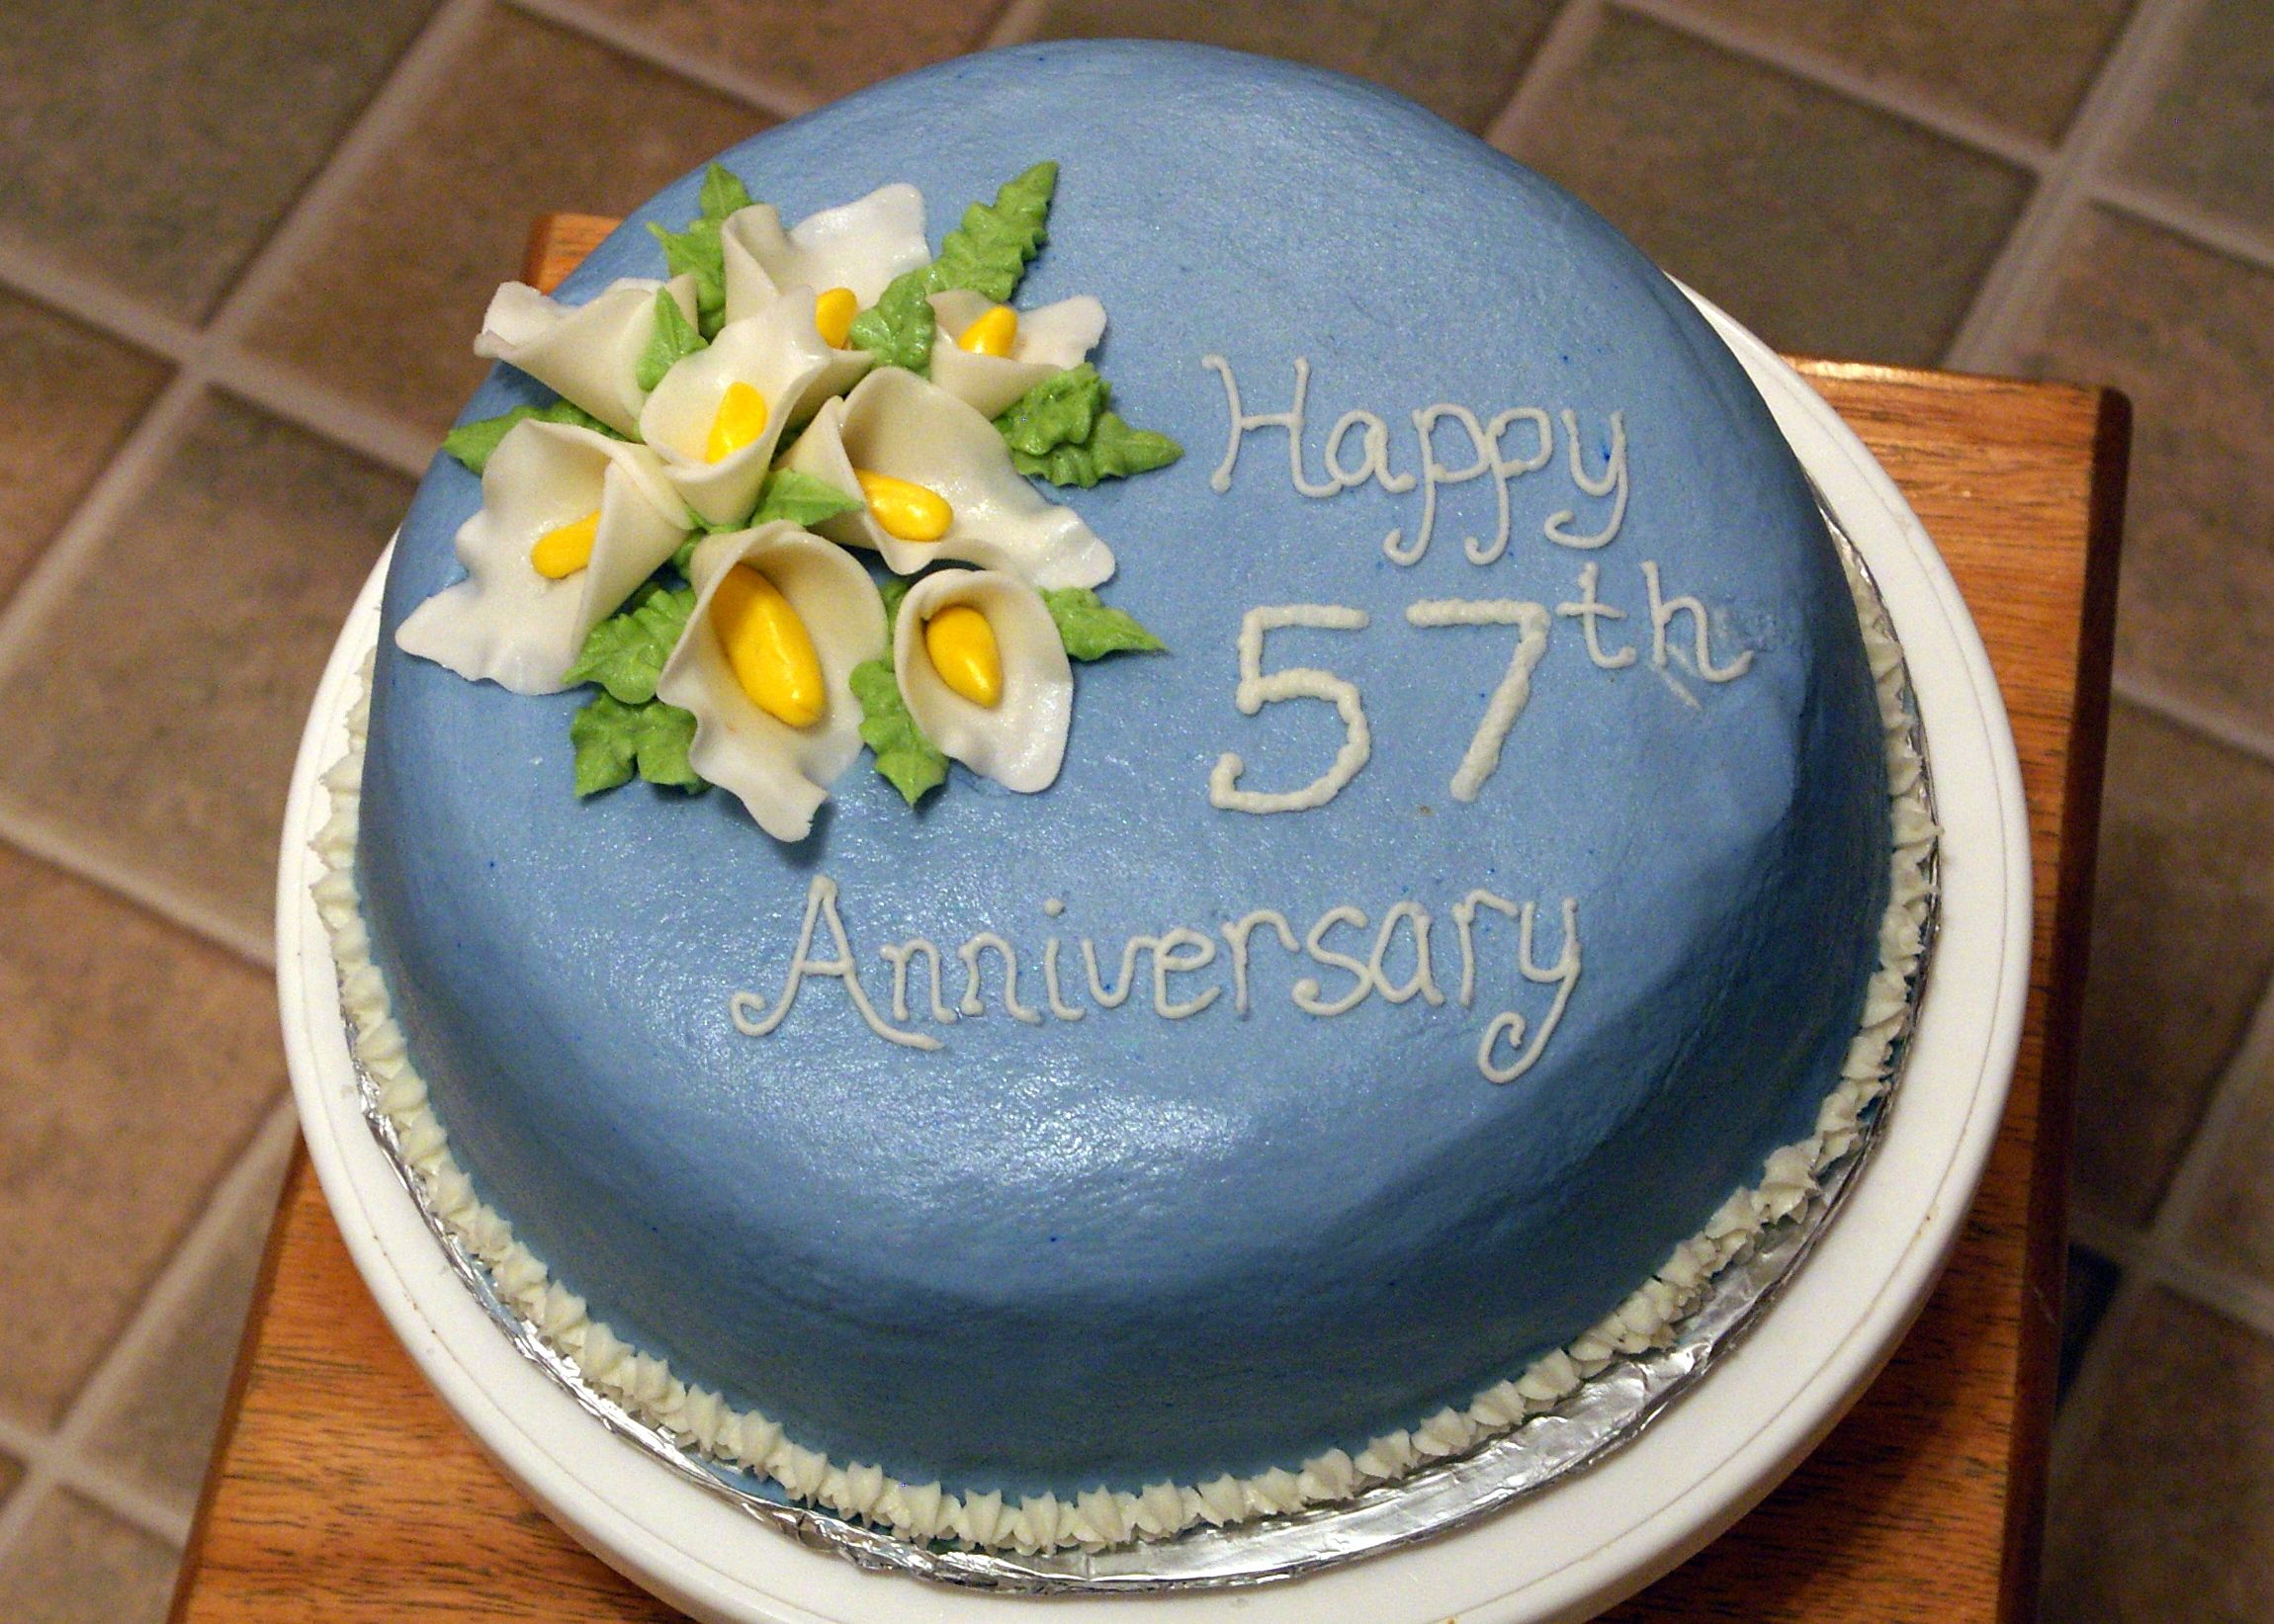 57th Wedding Anniversary Mini Cake in 2019.